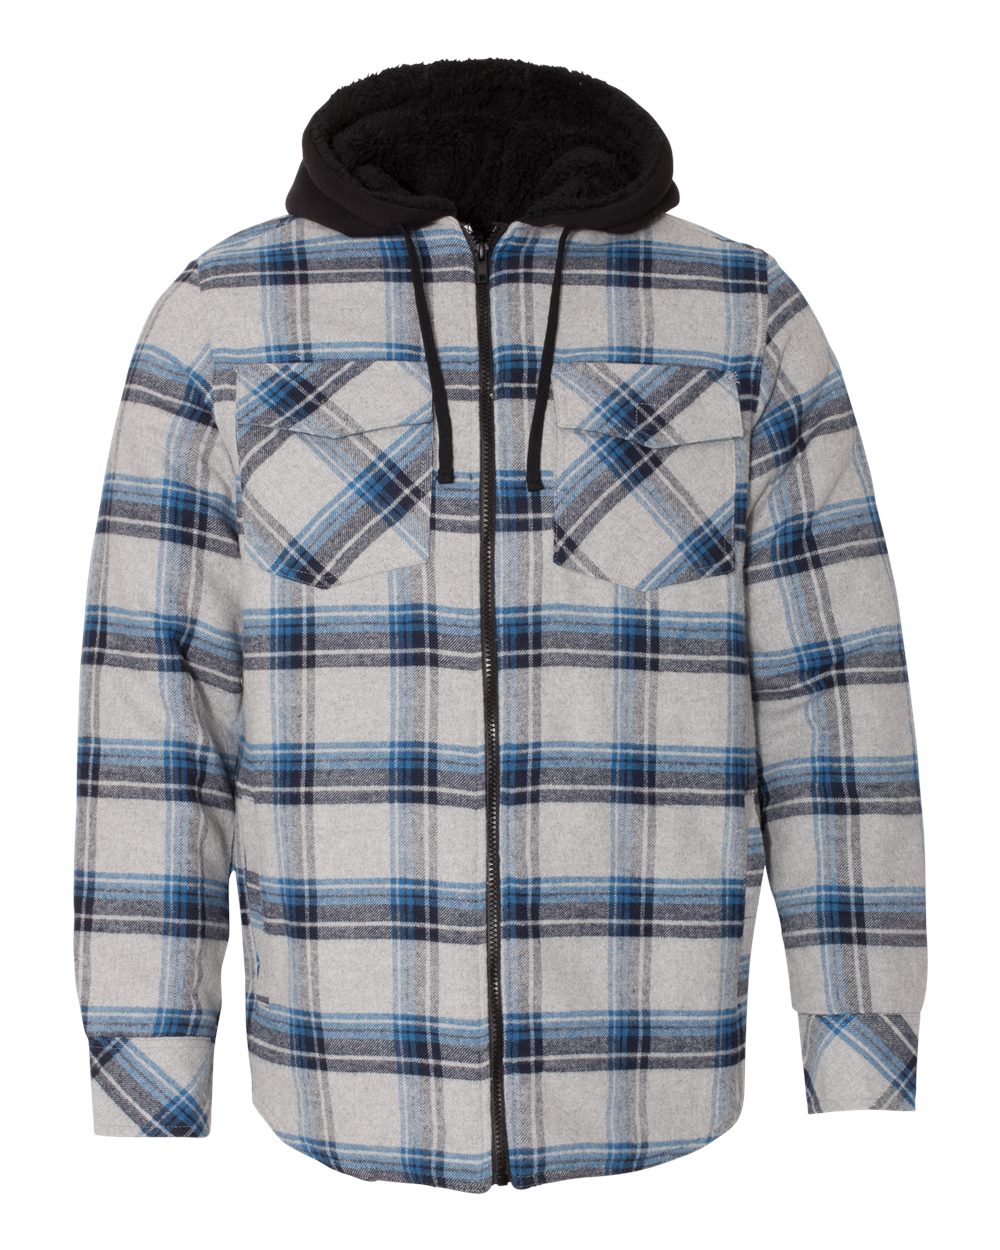 Burnside 8620 - Quilted Flannel Full-Zip Hooded Jacket